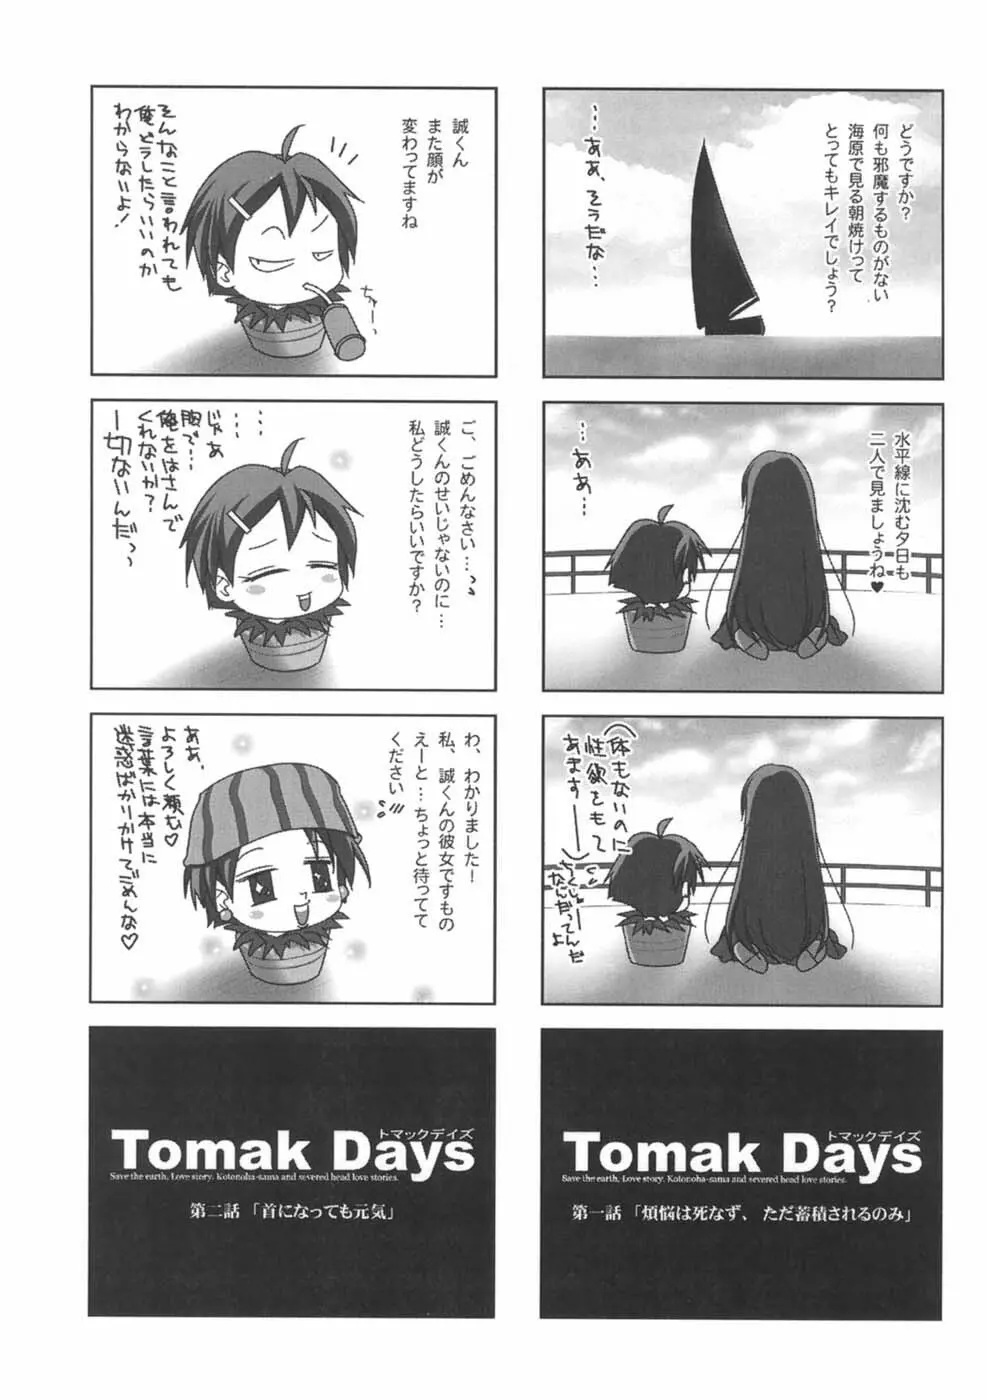 Tomak Days - page3